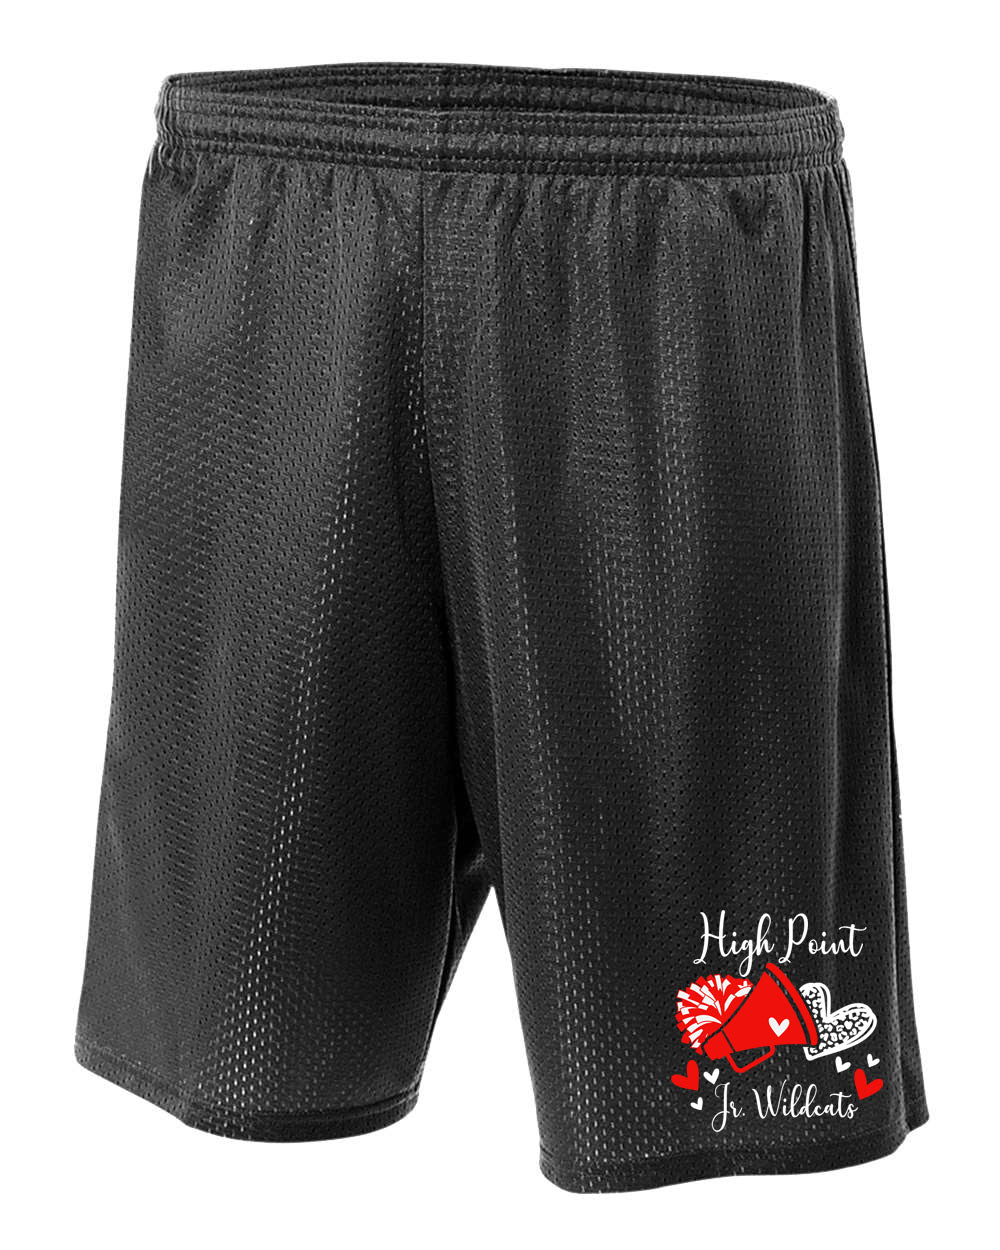 High Point Cheer Design 6 Shorts